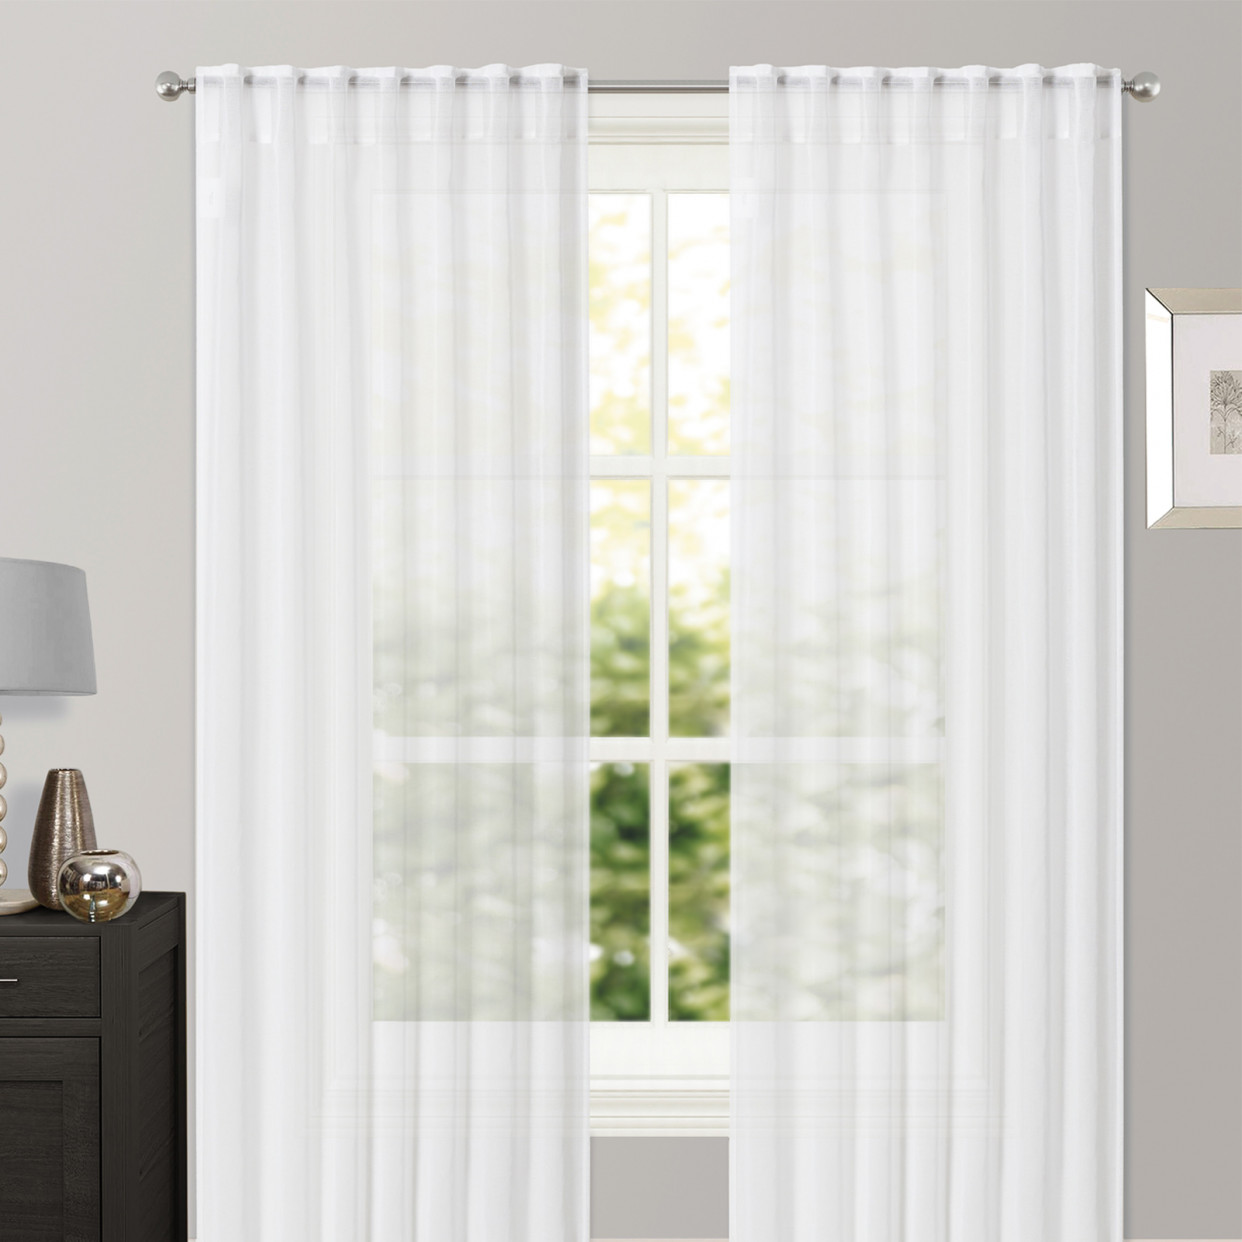 Brentfords Sheer Voile Curtains - 140 x 226cm (55" x 89")>